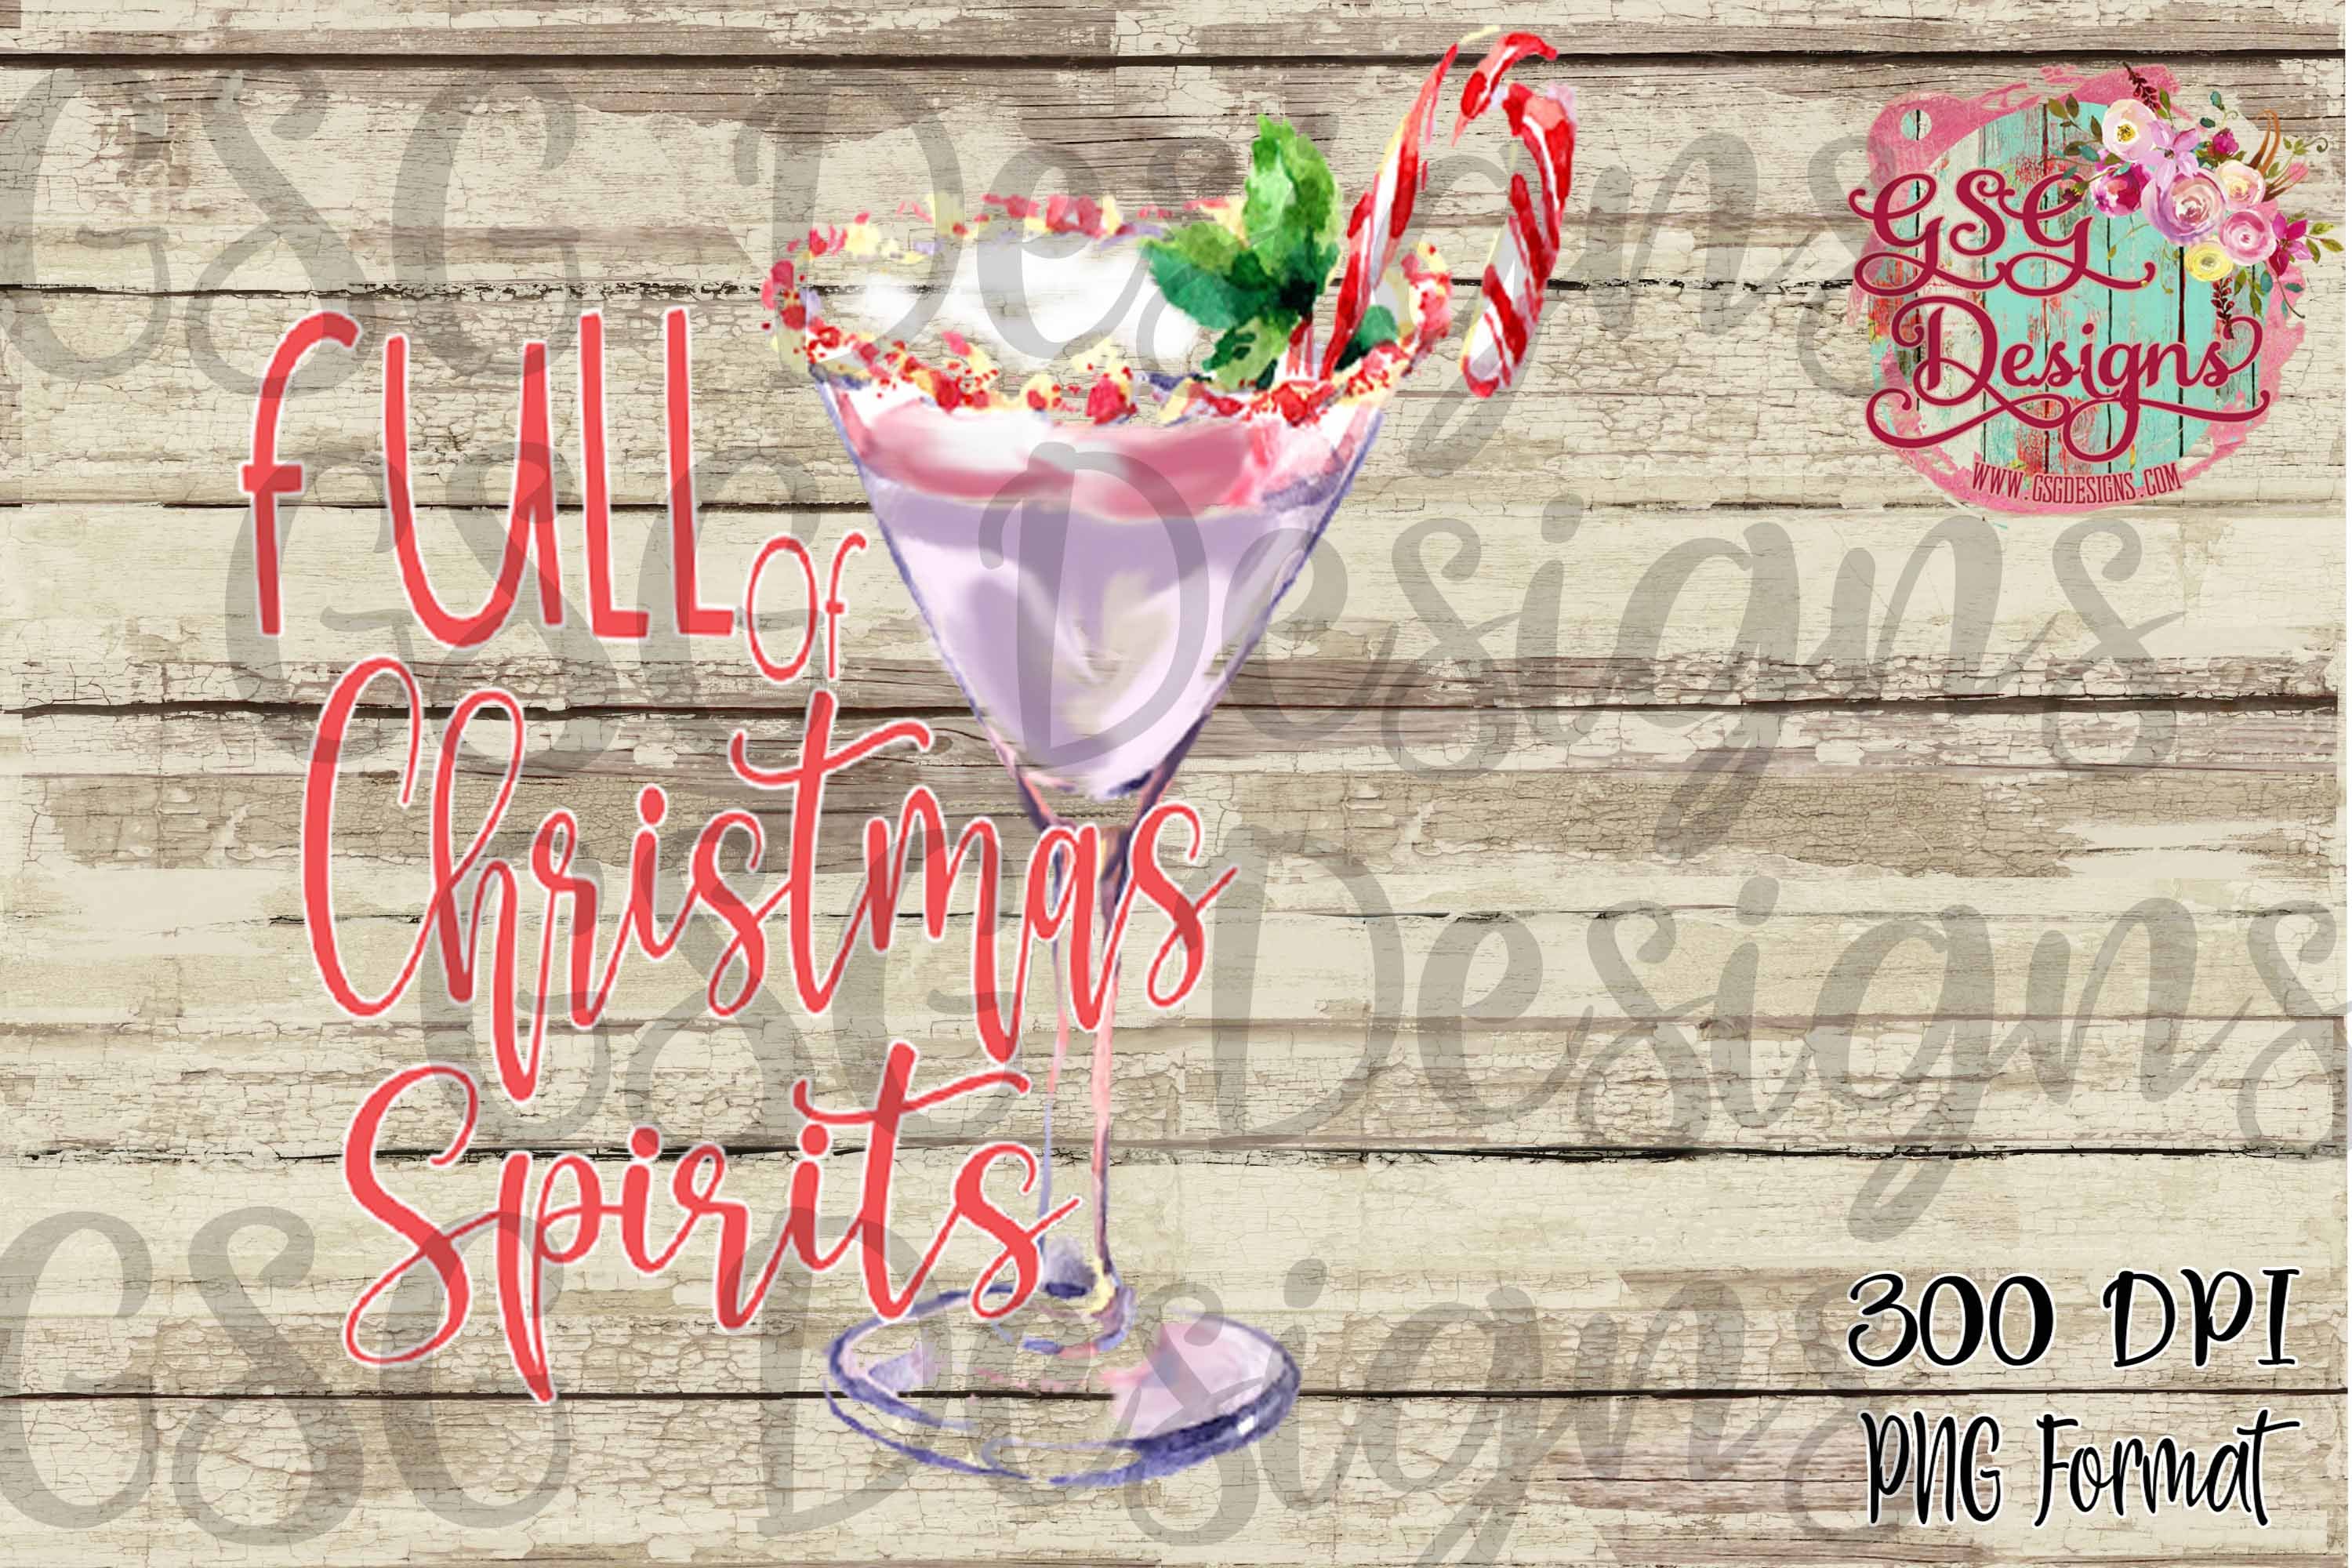 Full of Holiday Spirits Funny Christmas Digital Design File